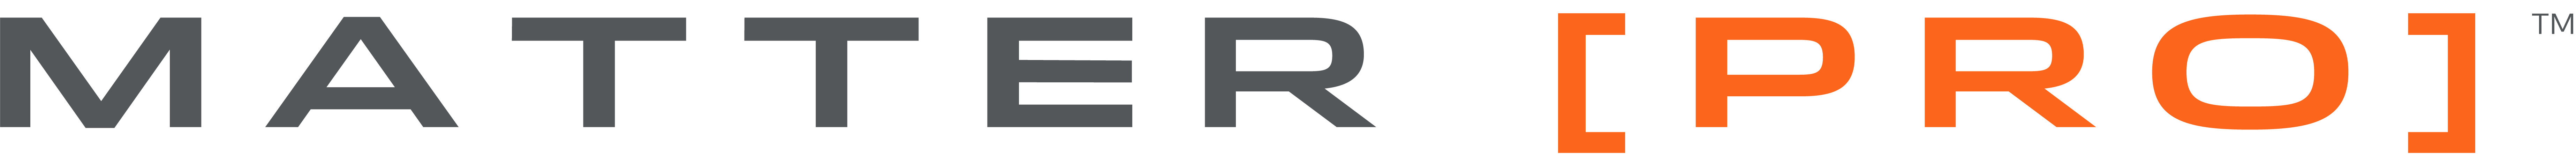 MATTER Pro Logo